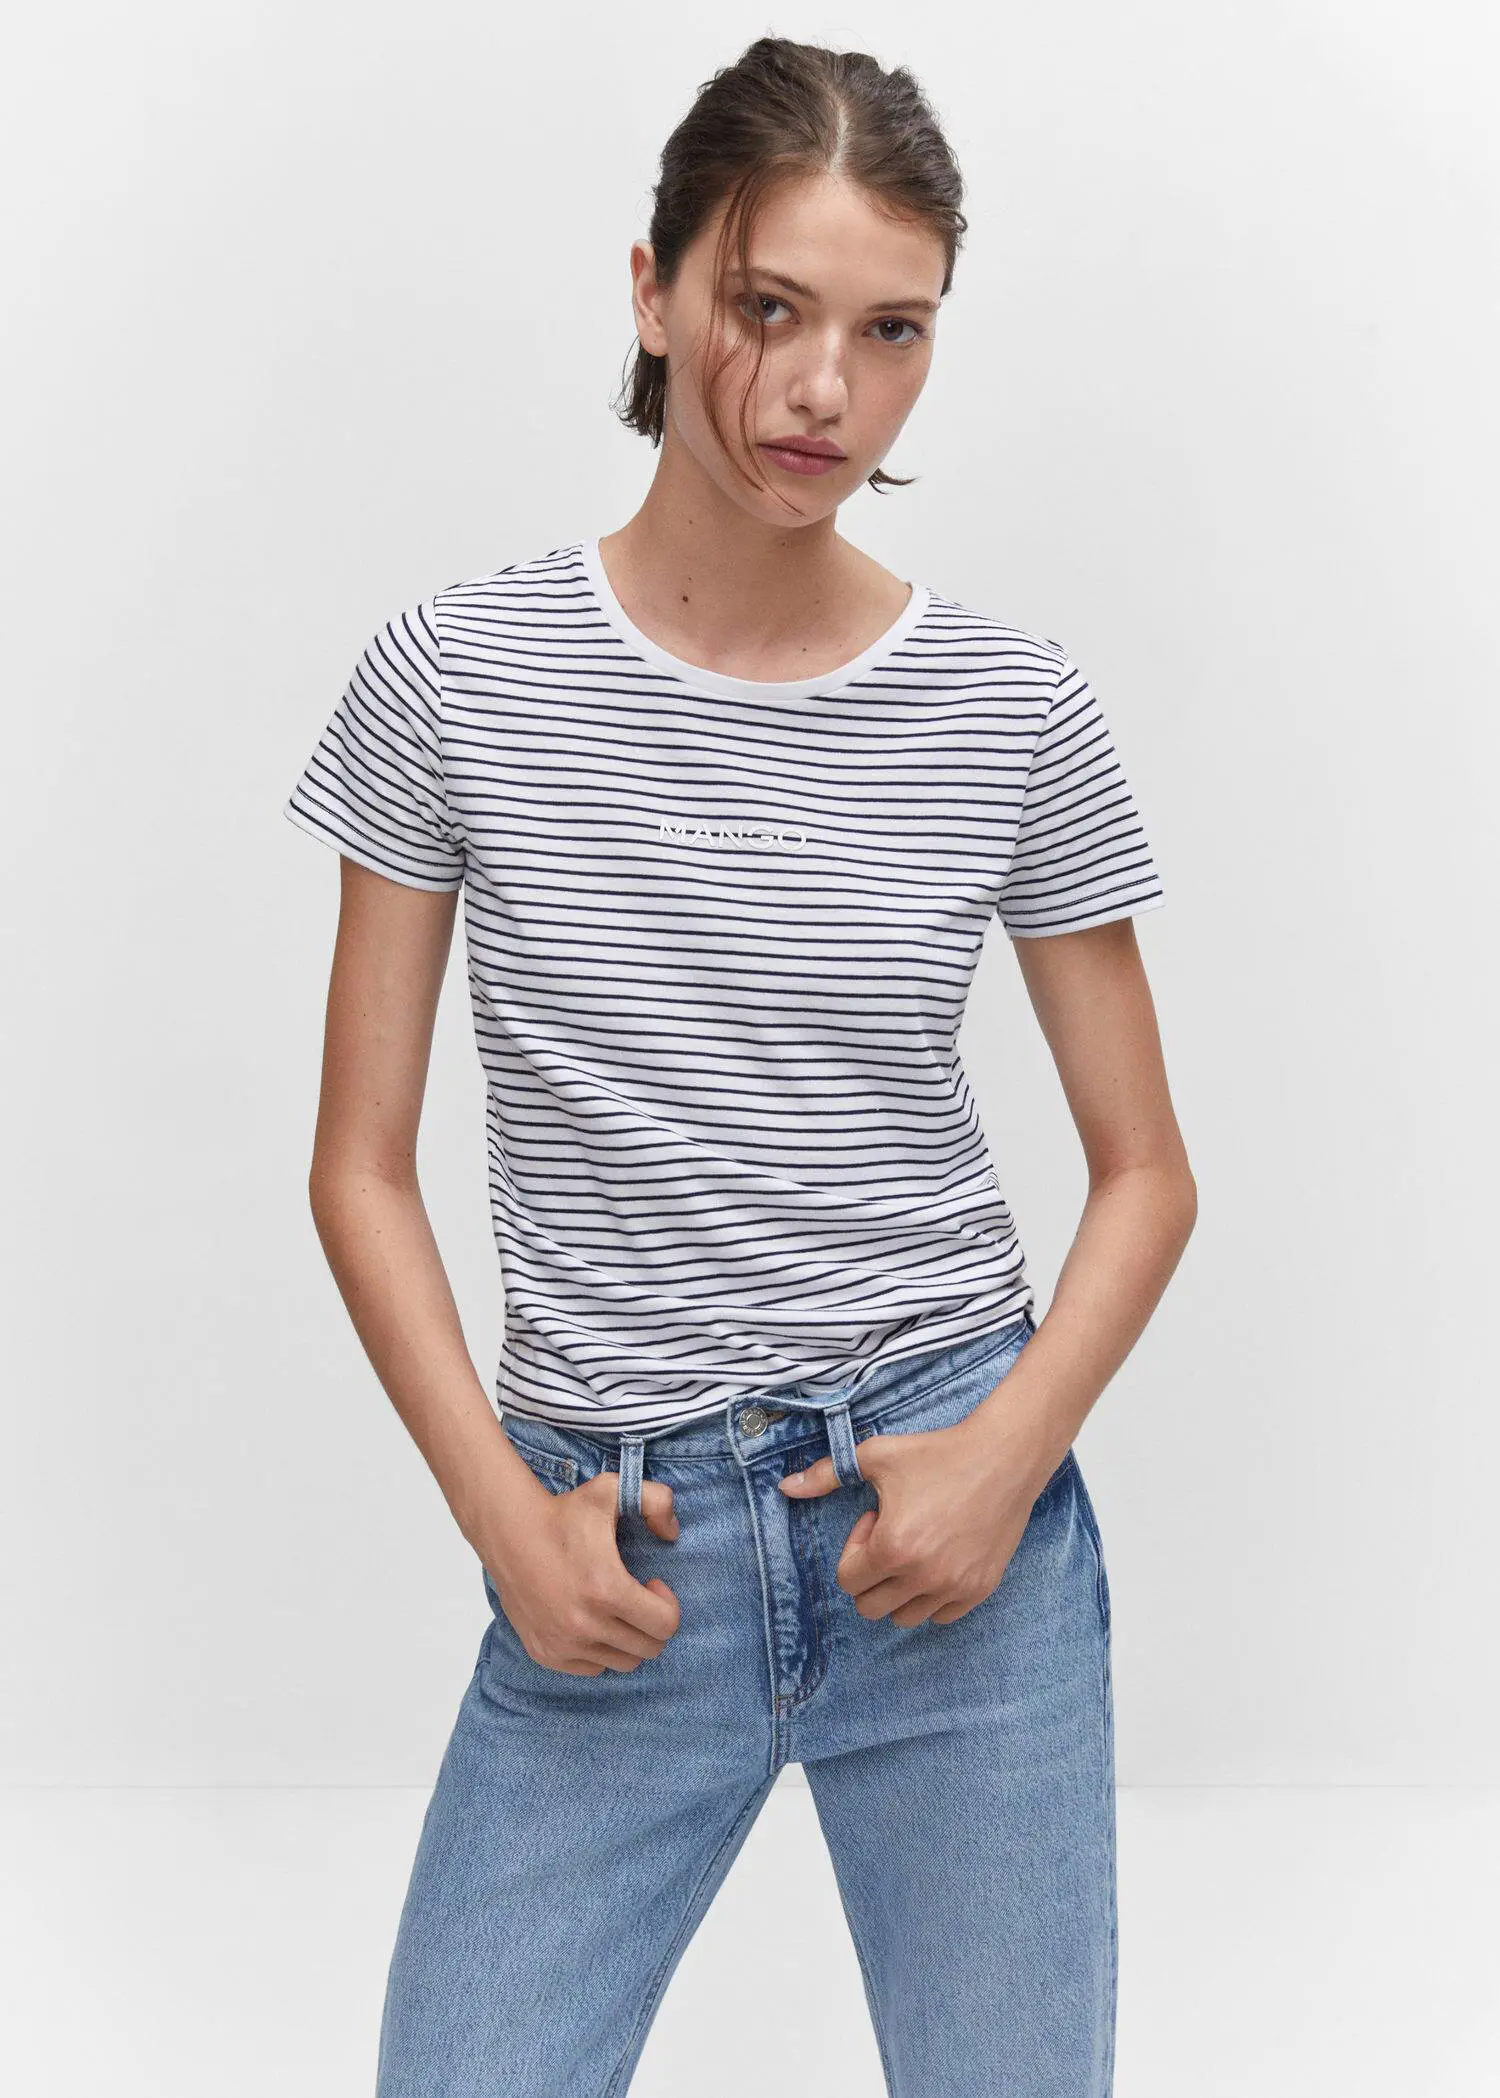 Mango Striped logo T-shirt. a woman wearing a striped shirt and jeans. 